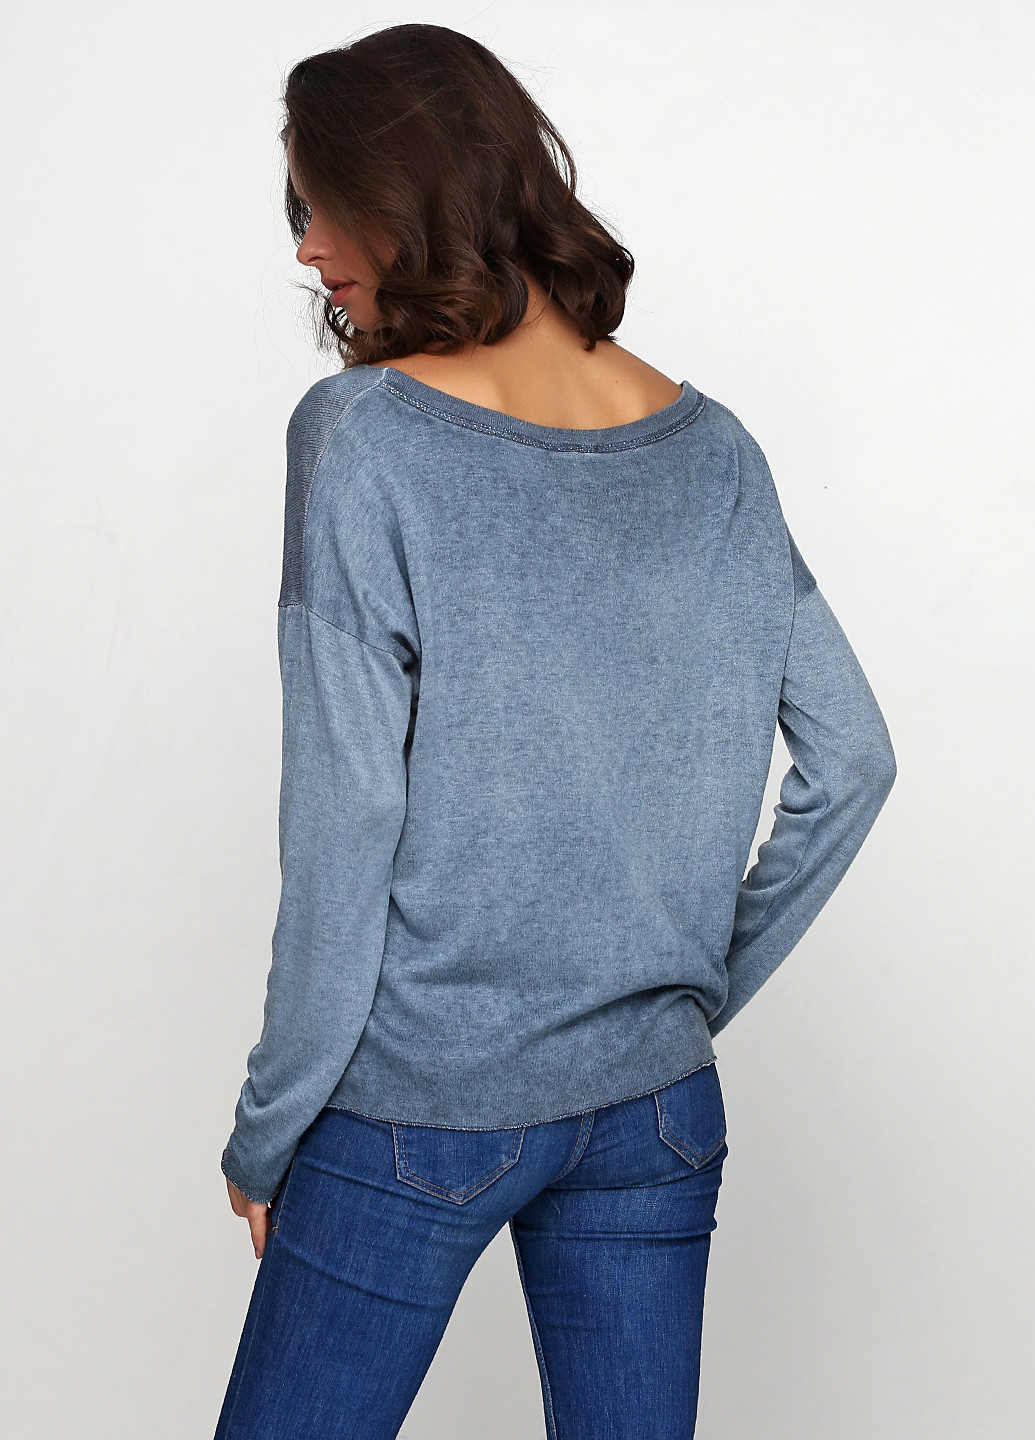 Серо-голубой демисезонный пуловер пуловер Made in Italy